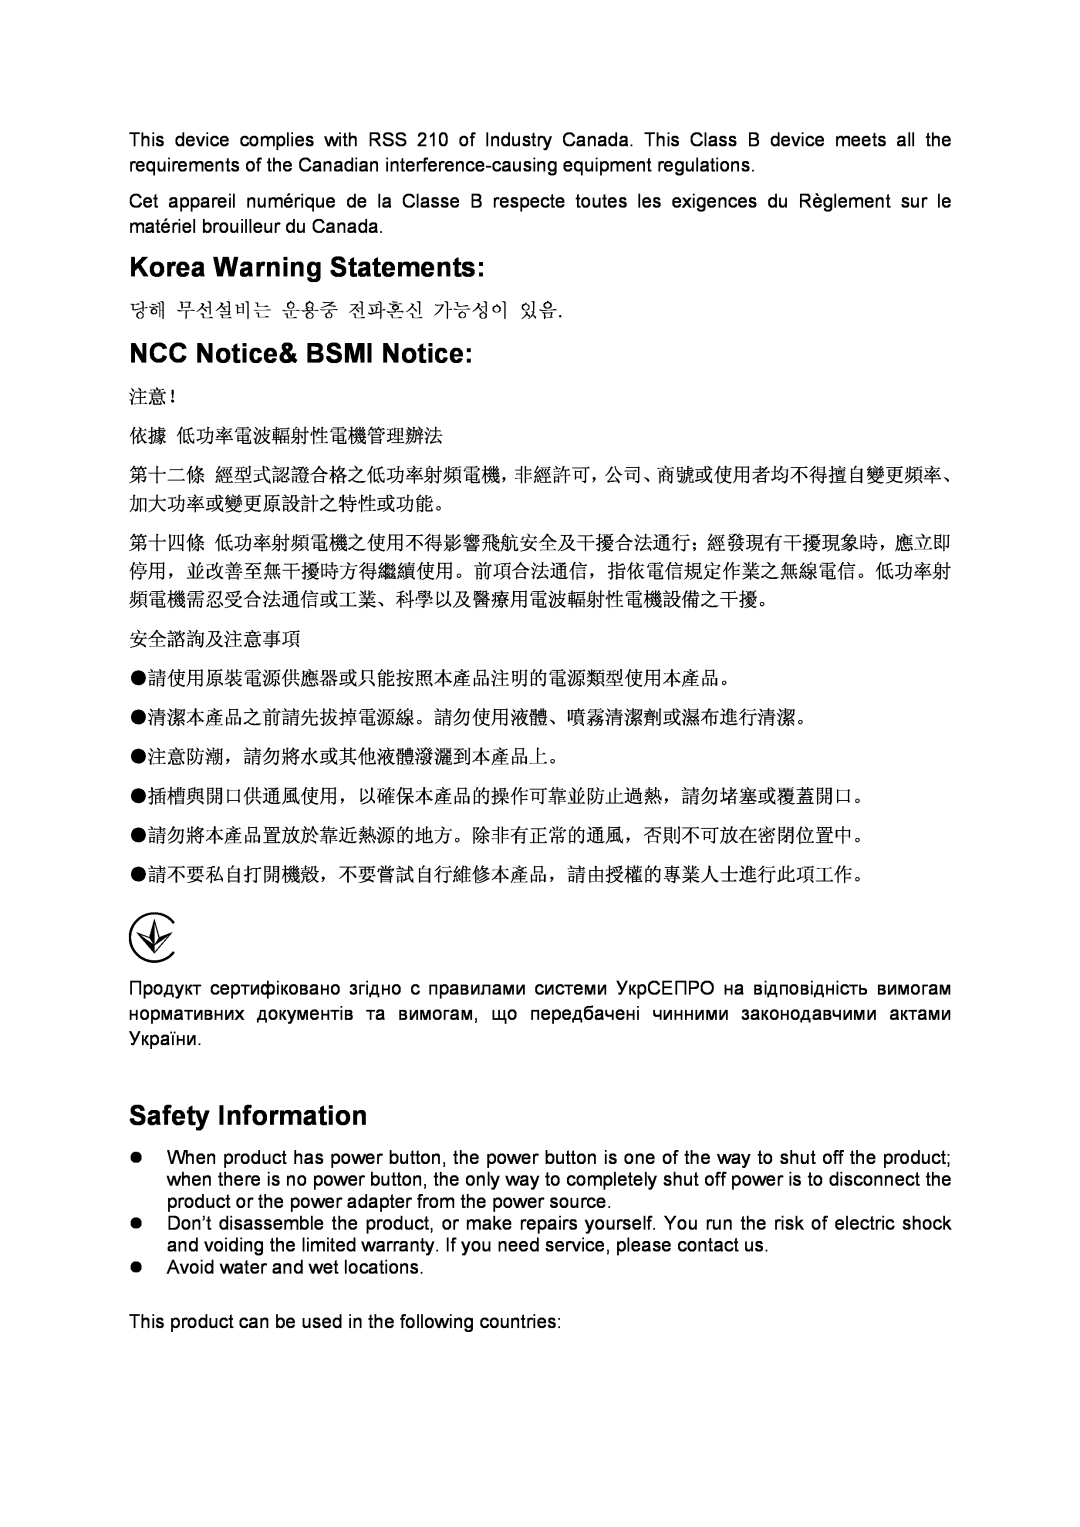 TP-Link TD-W8980 manual Korea Warning Statements, NCC Notice& BSMI Notice, Safety Information 